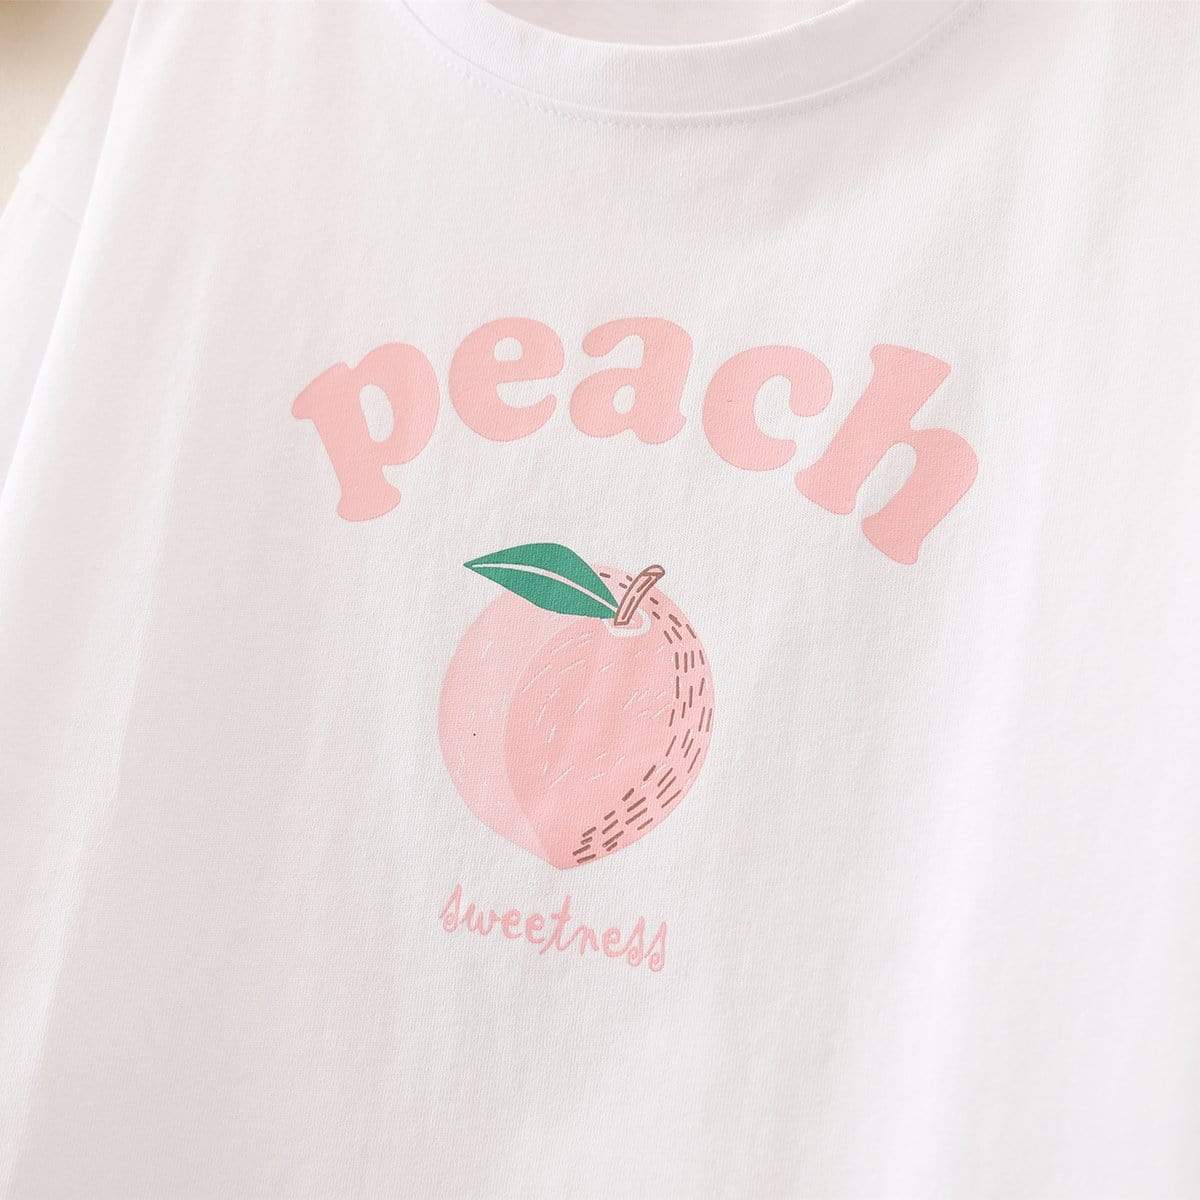 Kawaiifashion One Size Women's Sweet Peach Printed Tees